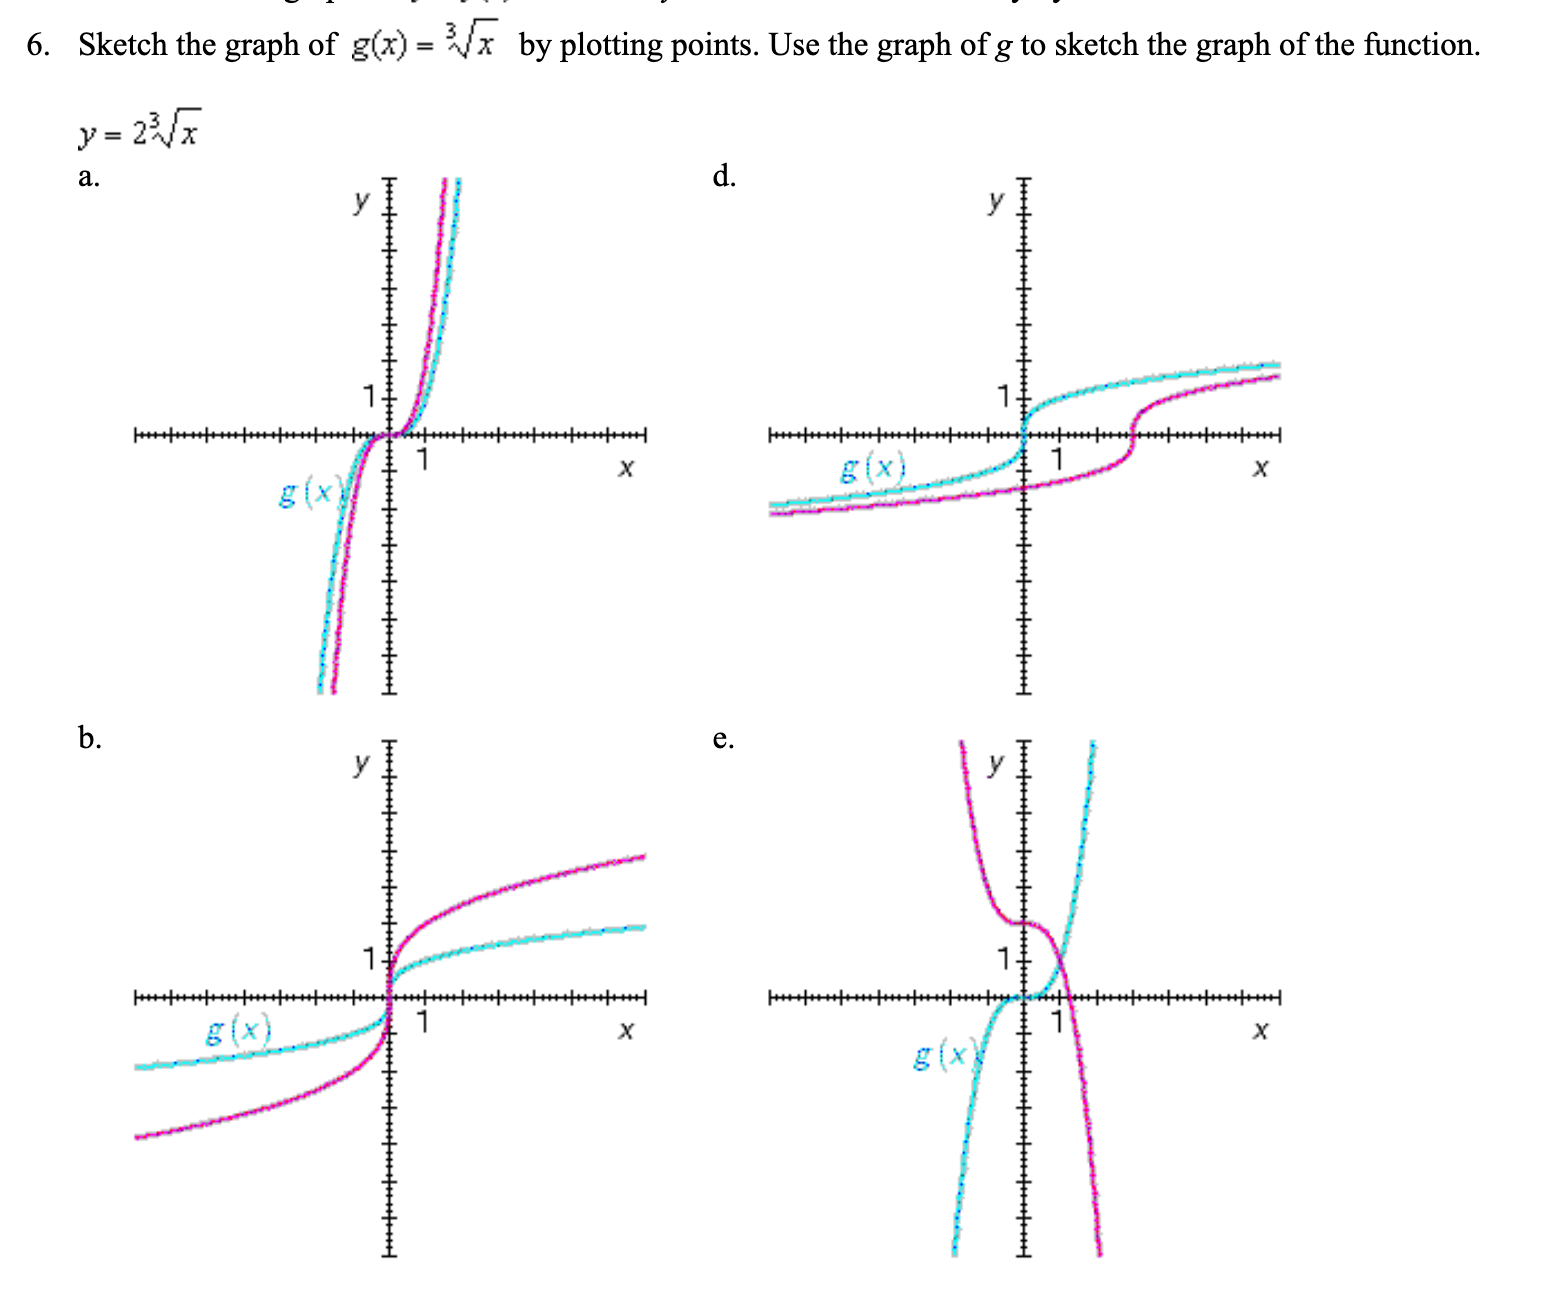 Sketch the graph of g(z) x by plotting points. Use the graph of g to sketch the graph of the function
6.
=
y= 2/x
а.
d.
1
trriteetessterseteestes
tutuutrreiturtsesstessel
teesiteretensterete*
rtursterritrrr
g(x)
X
g(x
х
b.
е.
1
nstseretesetserstuutrstssfsuntsrntseetessetrsteretssent
1
1
nsteriterntursturntumteefudástjontuuterutumturutrrt
g(x)
х
X
g(x
Httrtumstersstsssstiirapntiutrnterrmtrurstriterrrl
ttertrsterritsecstrccižuntuntuutreturstrretrret
Htttrrstrrrstrrrrturjerrtrrerteurstrrretrrrstrrstrrer
ttmtttrtterrrtent ngstrrtermtrttrttermtrrrt
